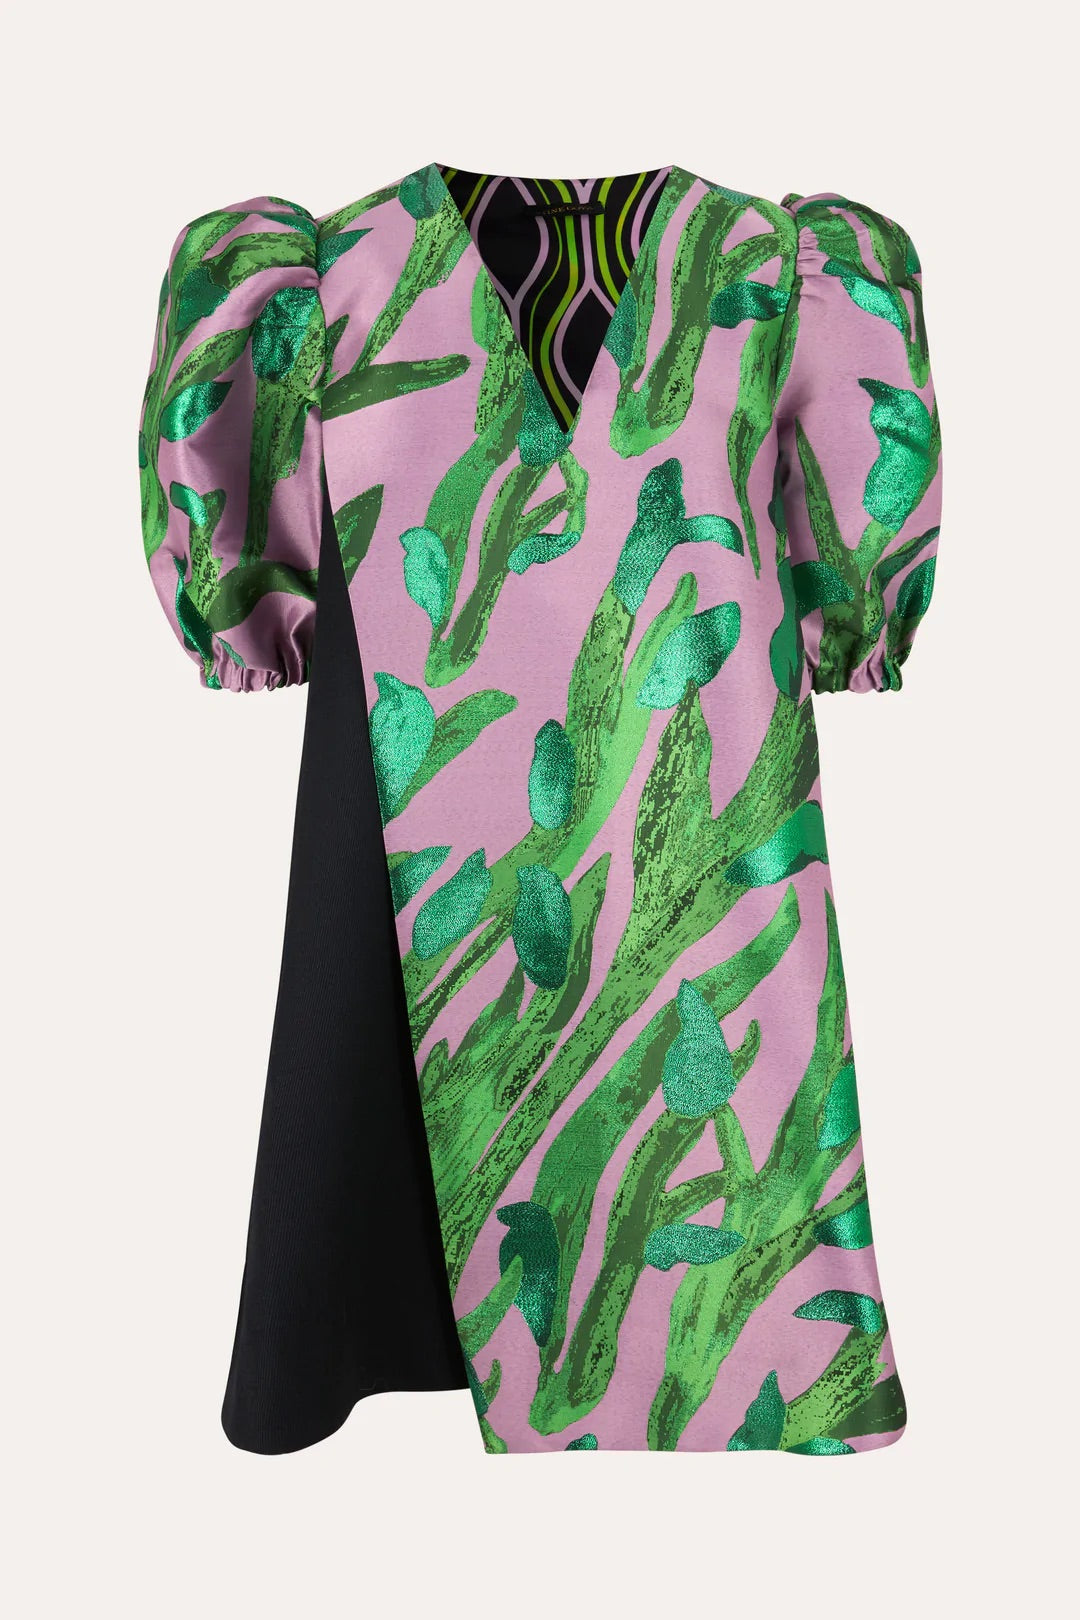 Stine Goya- Brethel Dress: Blooming Tree